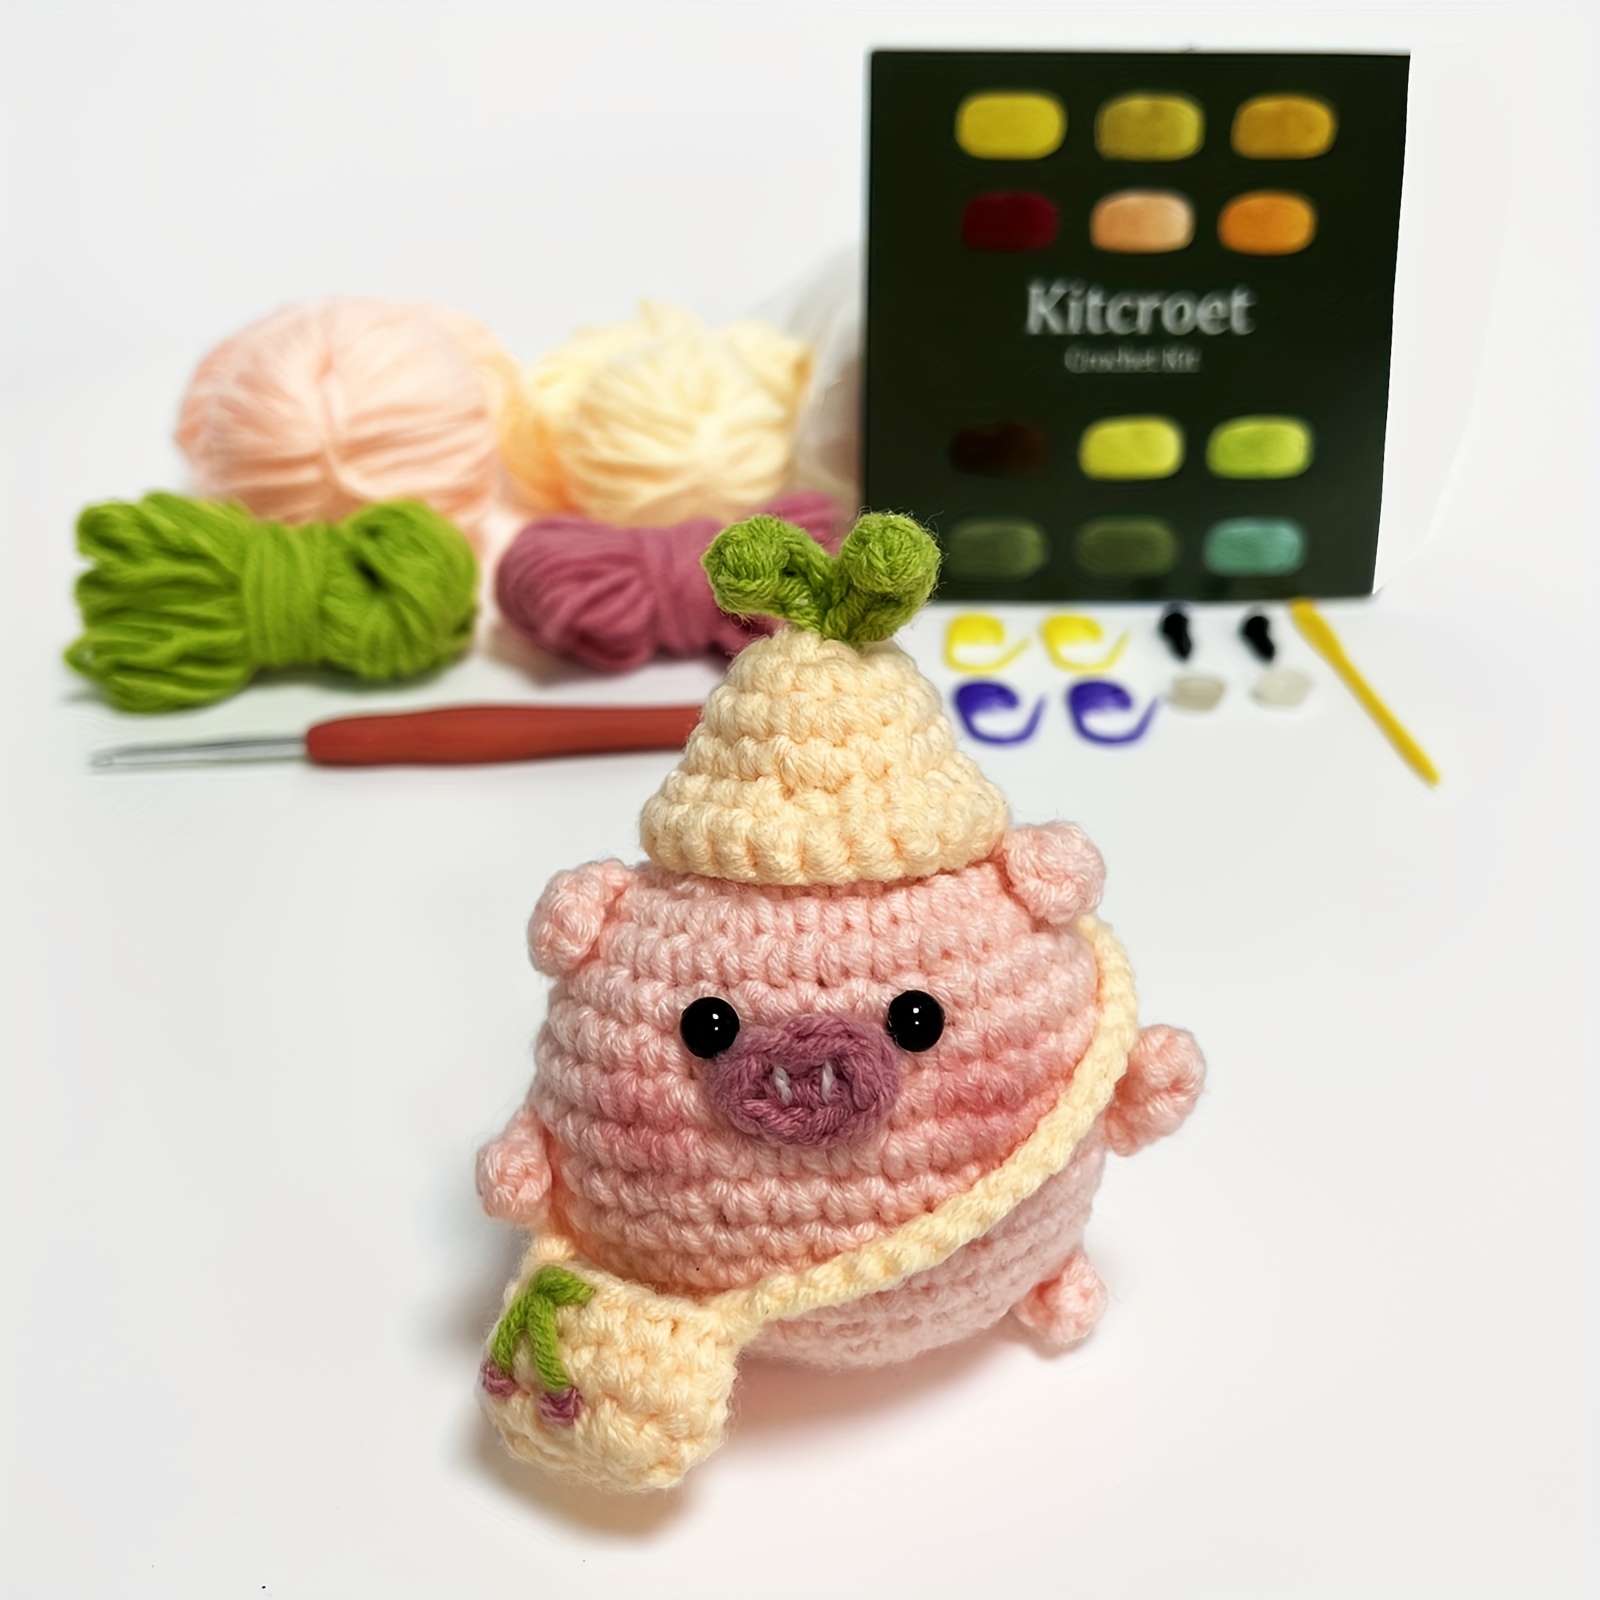 Pointe facile - Kit crochet débutant